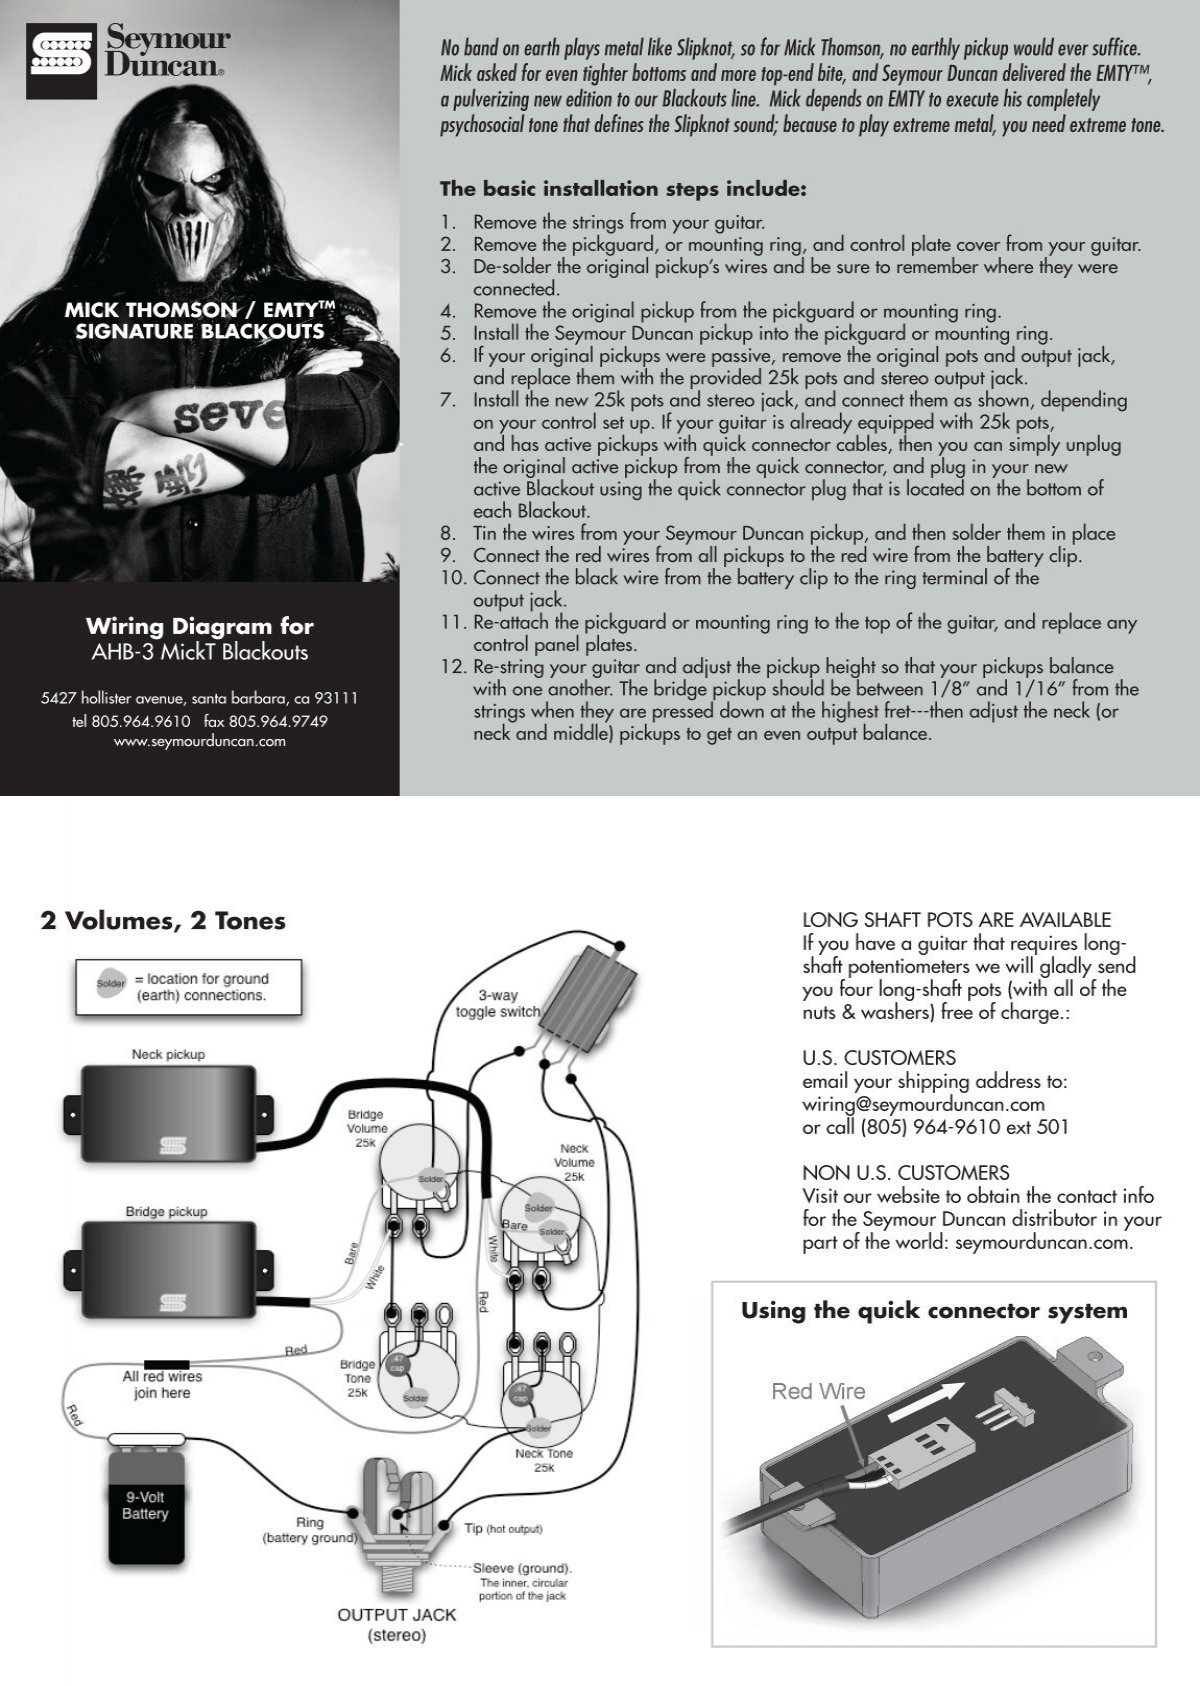 Wiring instructions - Seymour Duncan